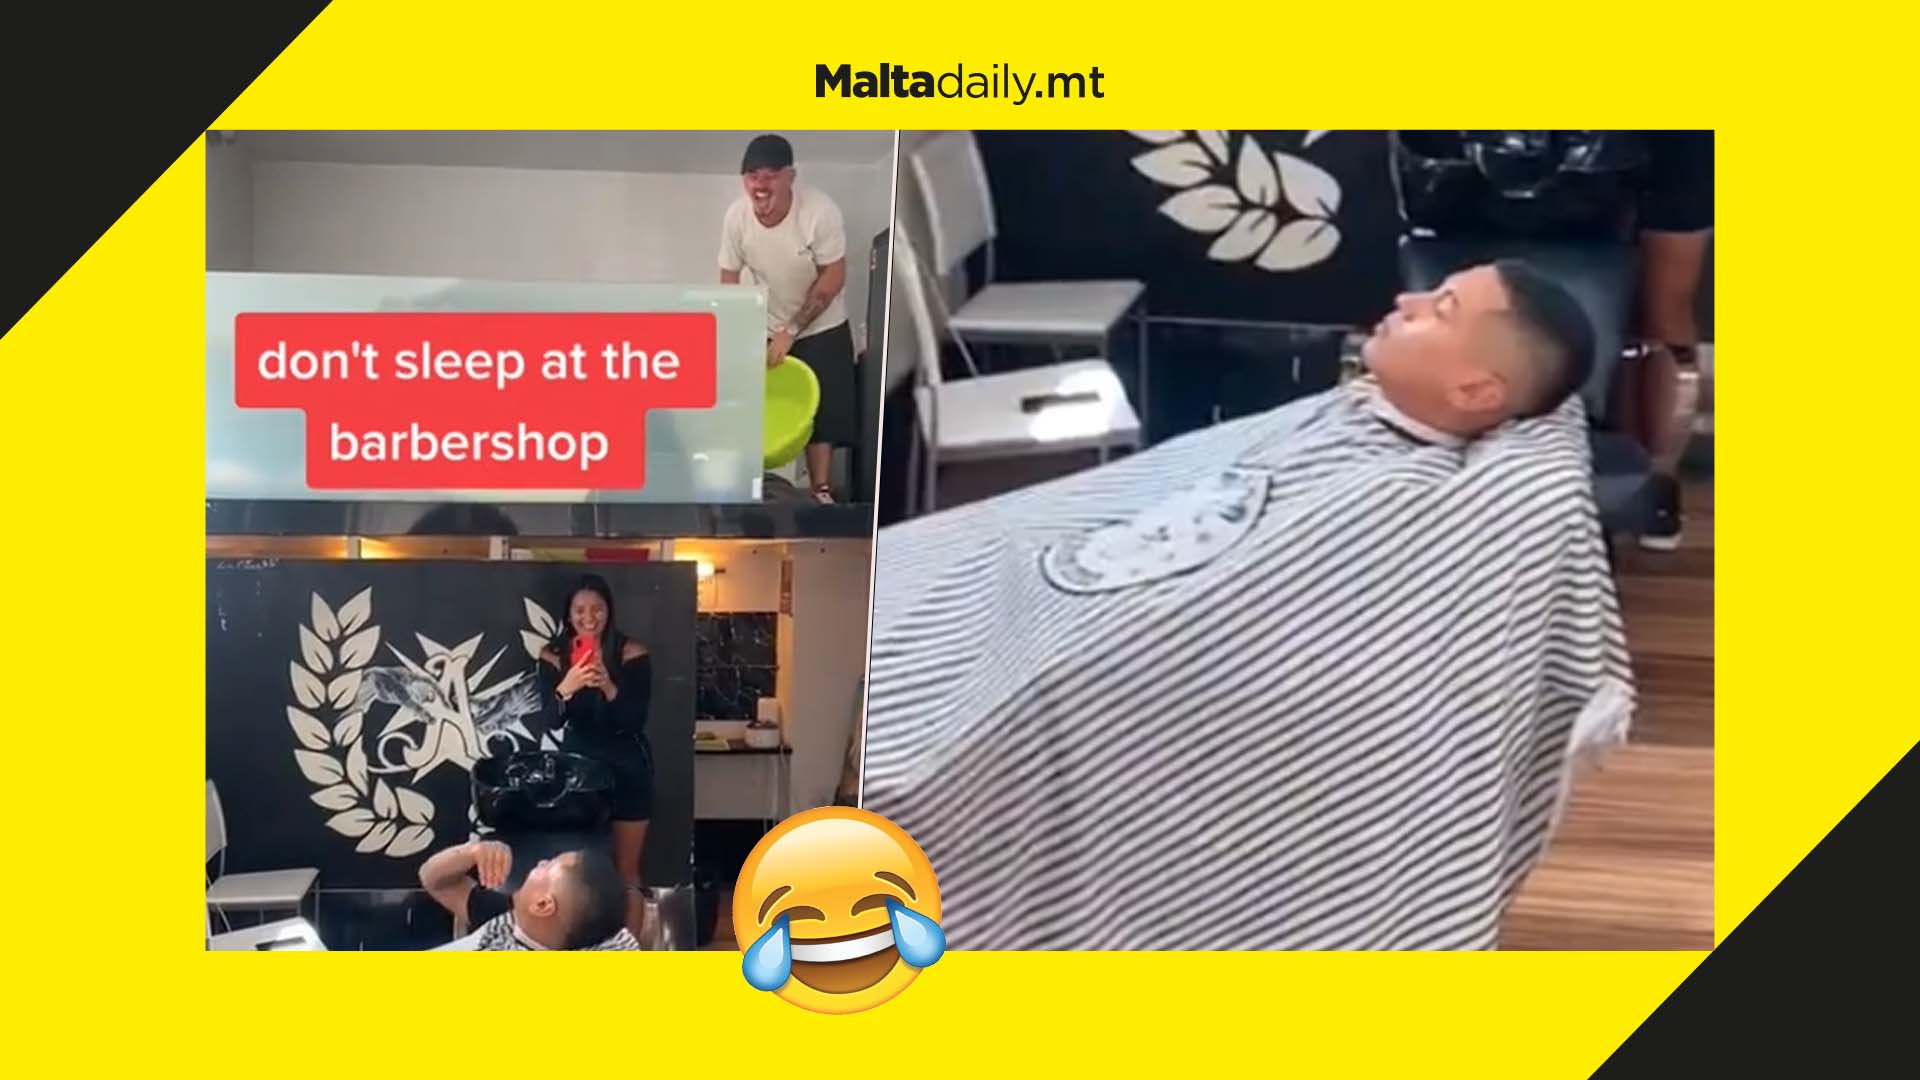 Italian barber in Malta pranks customer who fell asleep during cut